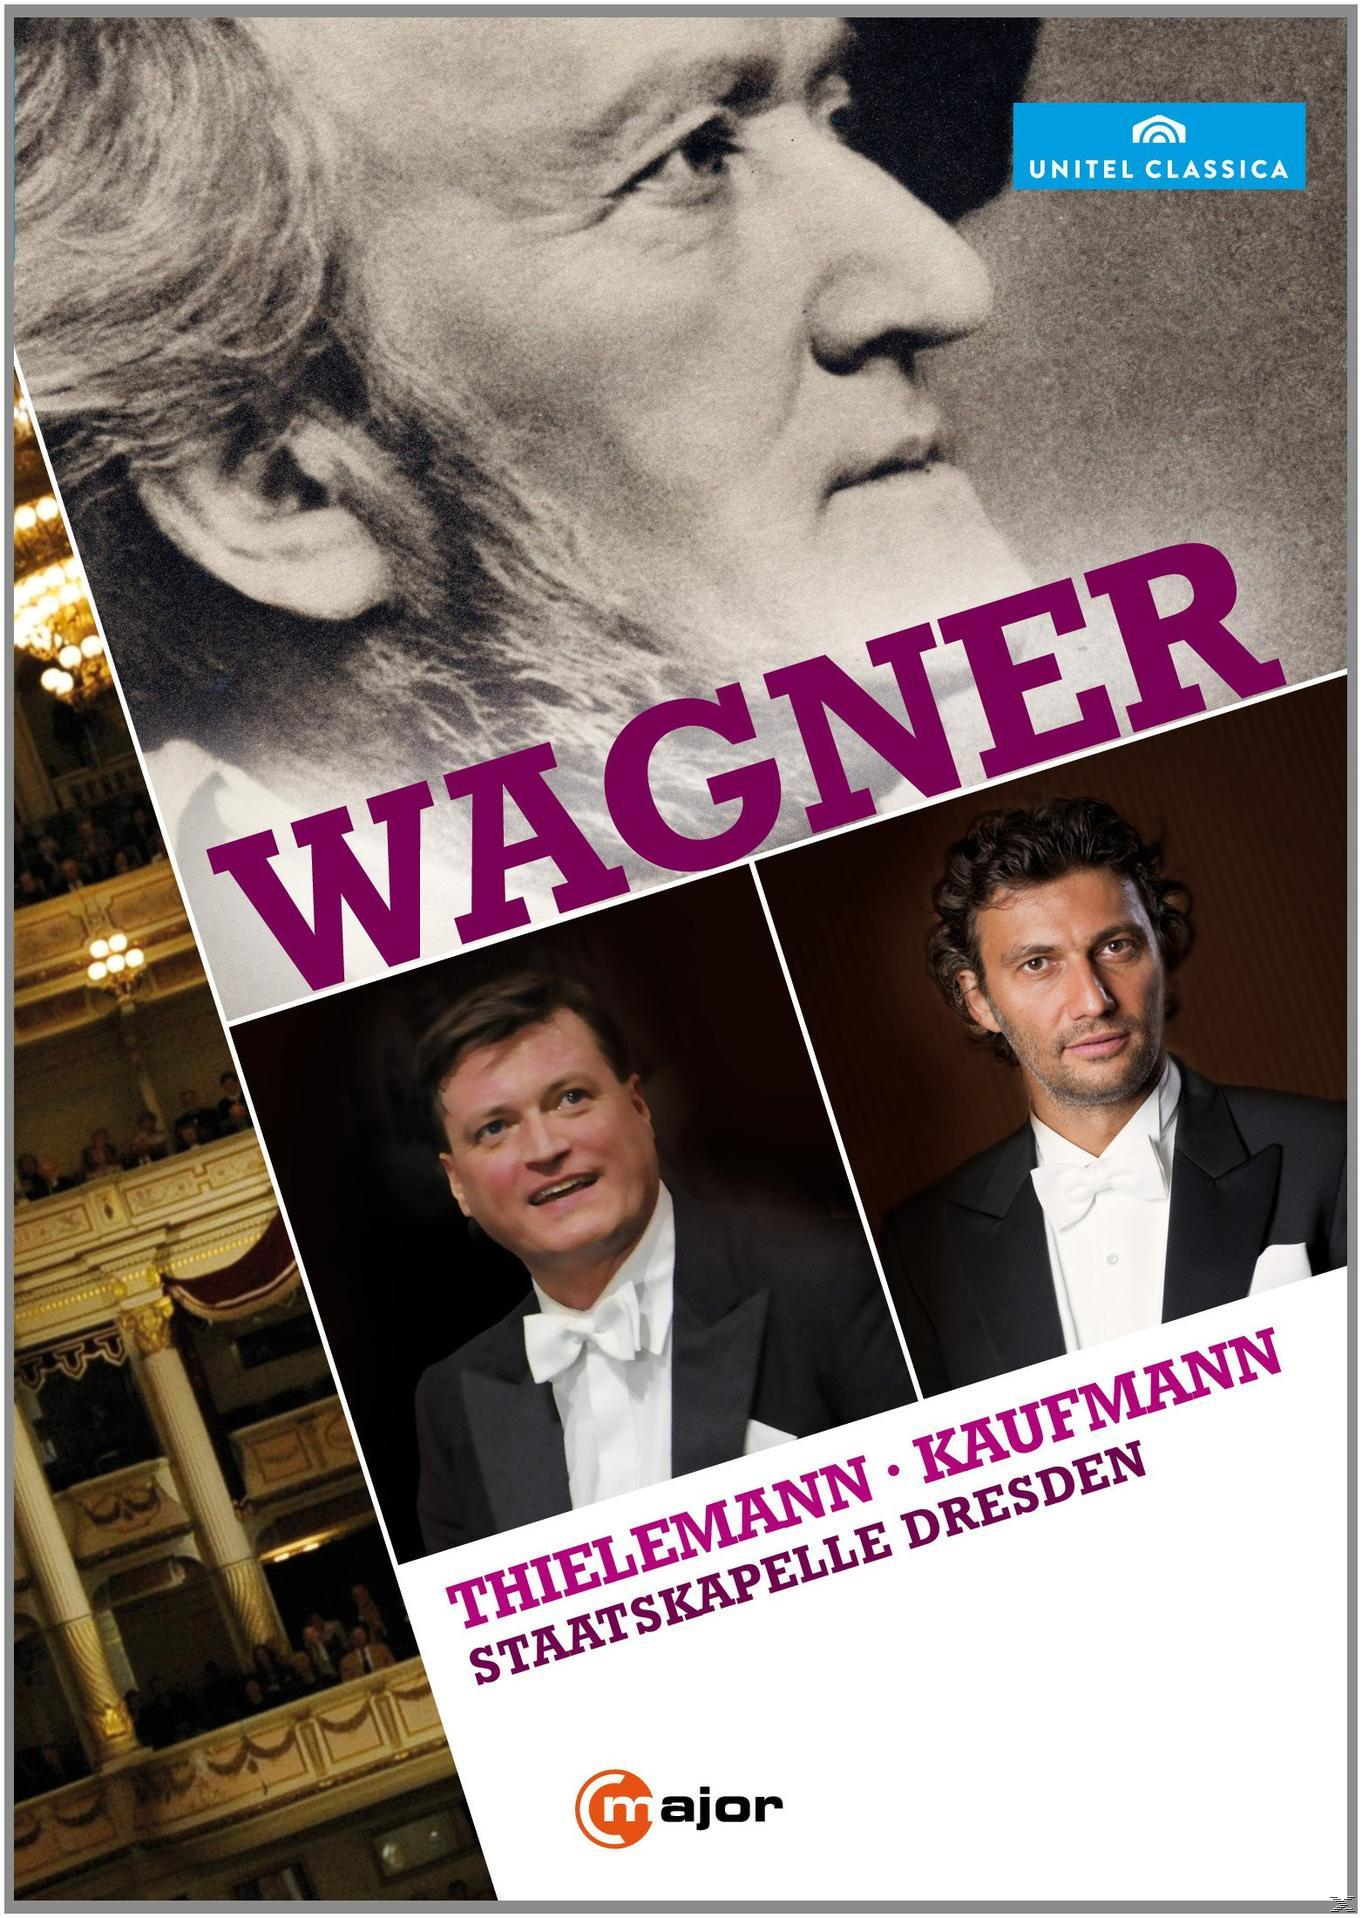 Jonas (DVD) Staatskapelle Dresden - Kaufmann, - Thielemann/Kaufmann/SD